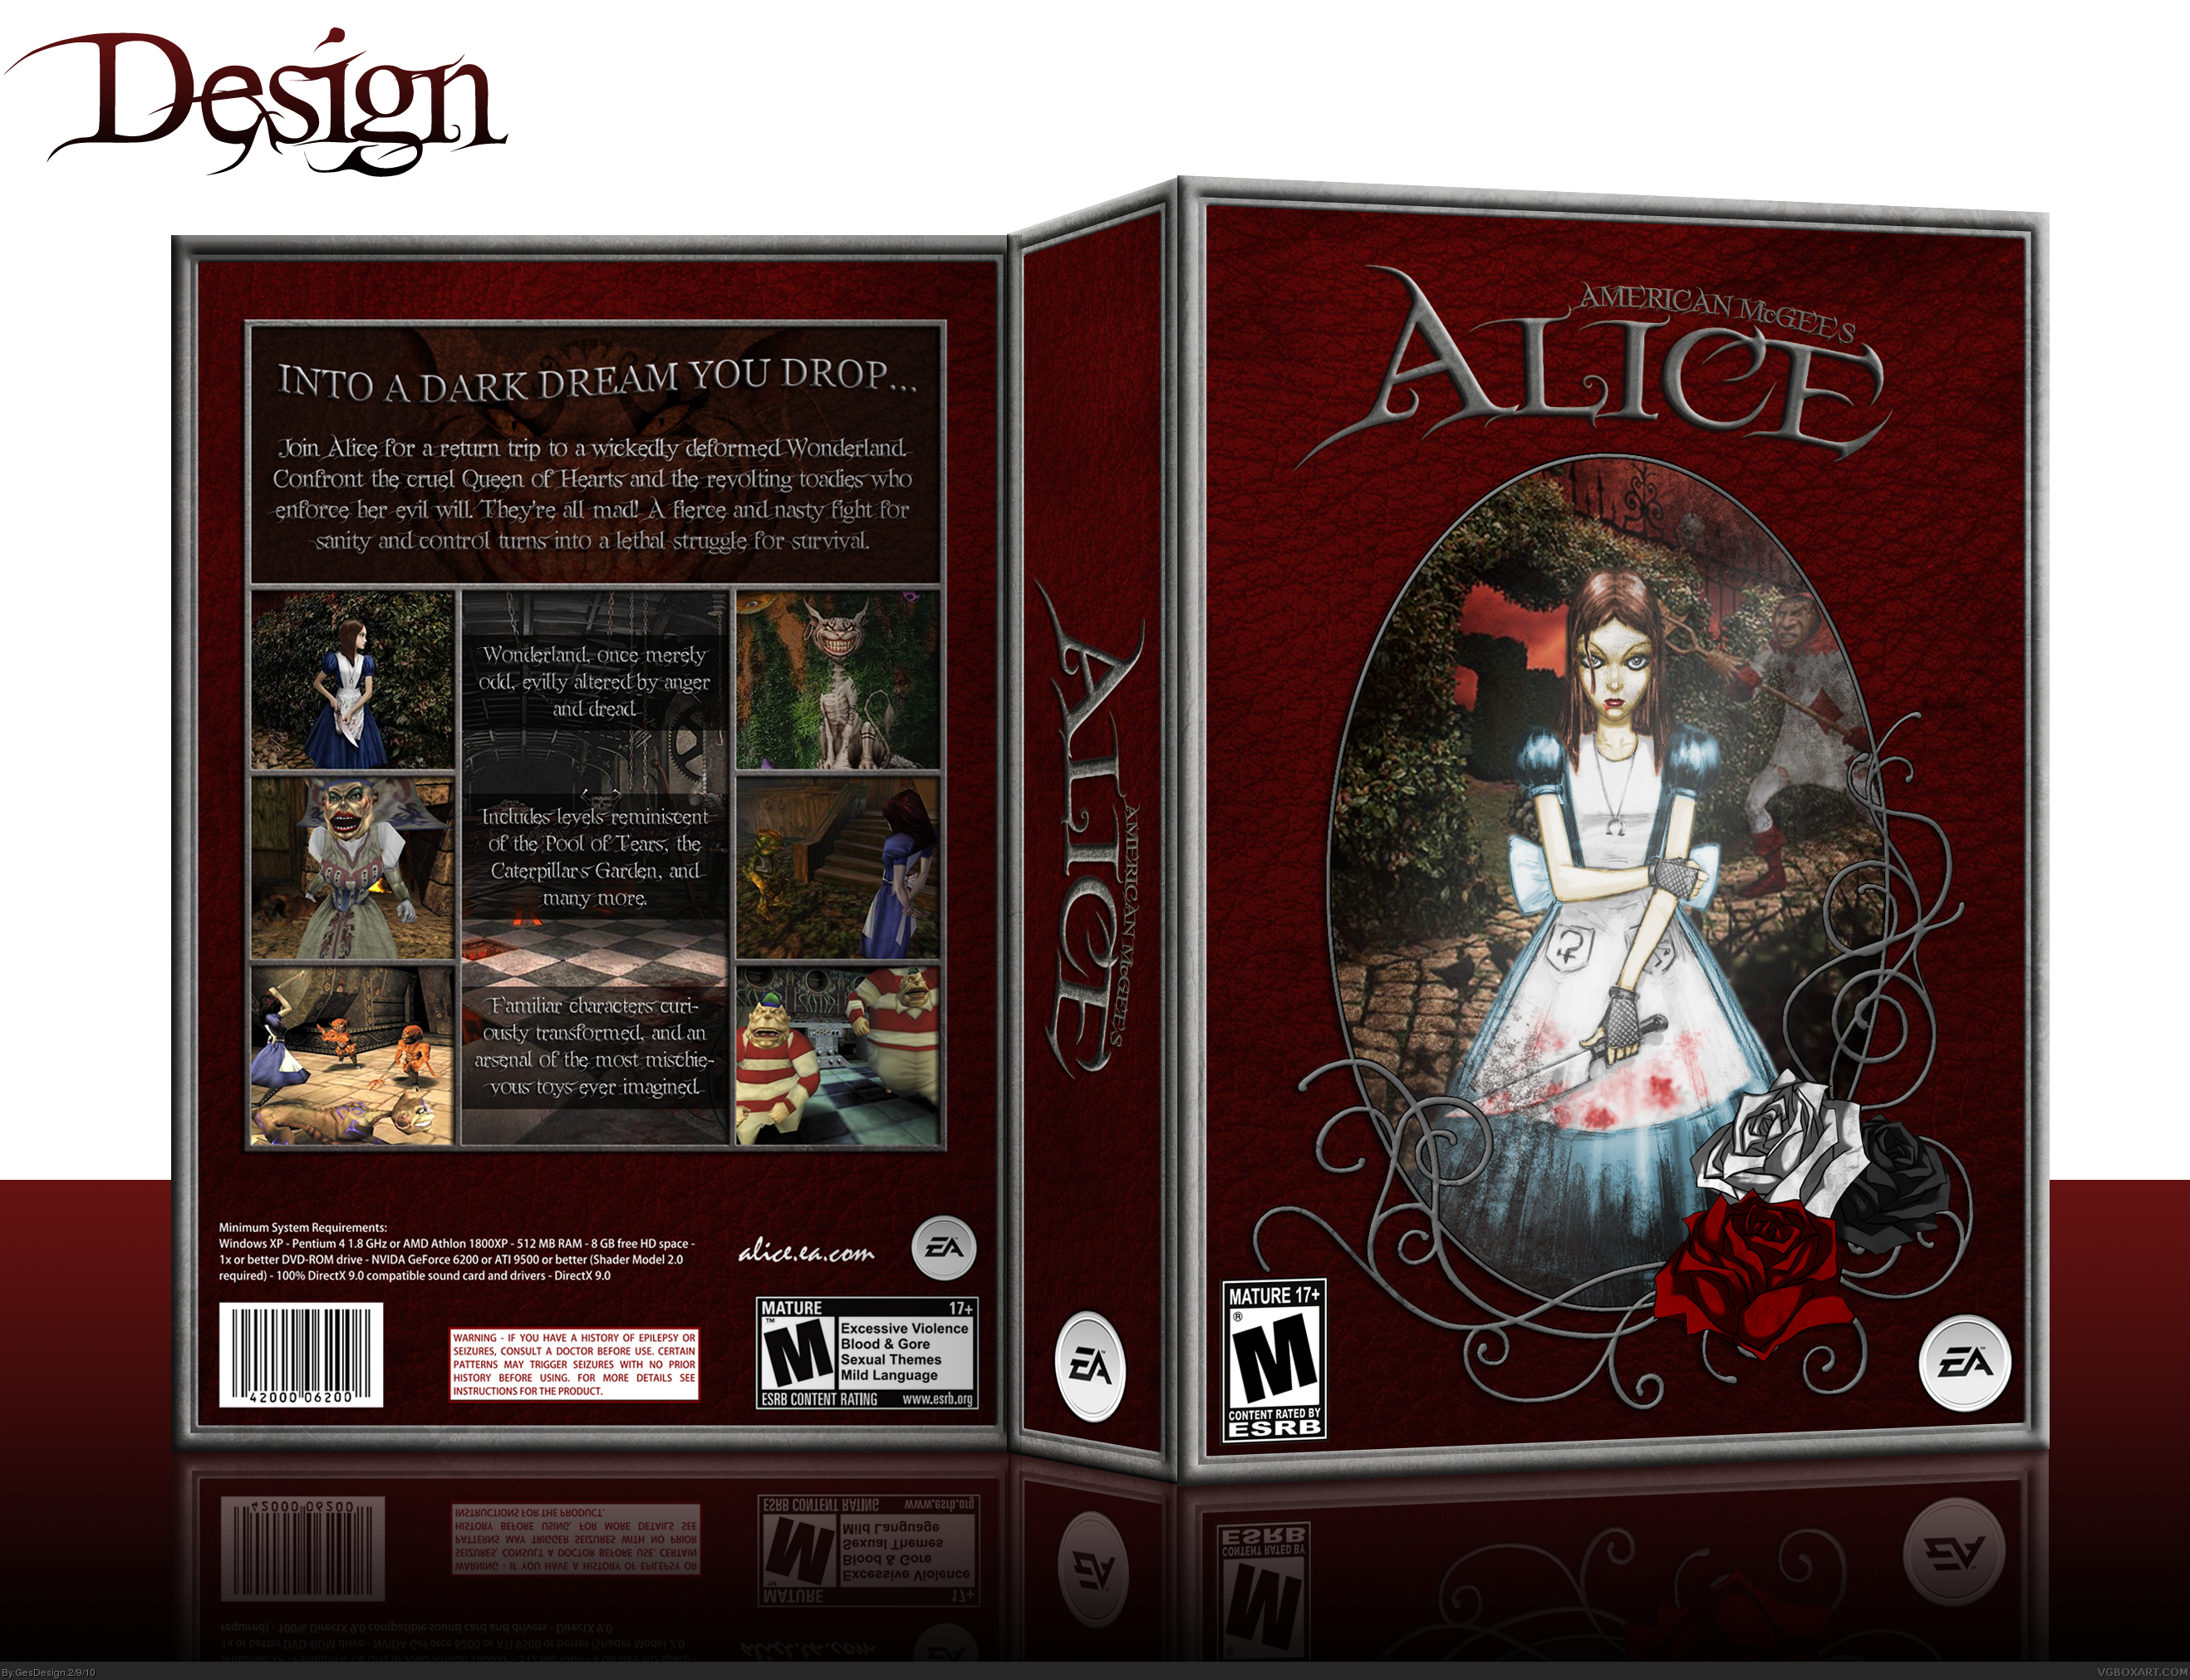 American McGee's Alice box cover